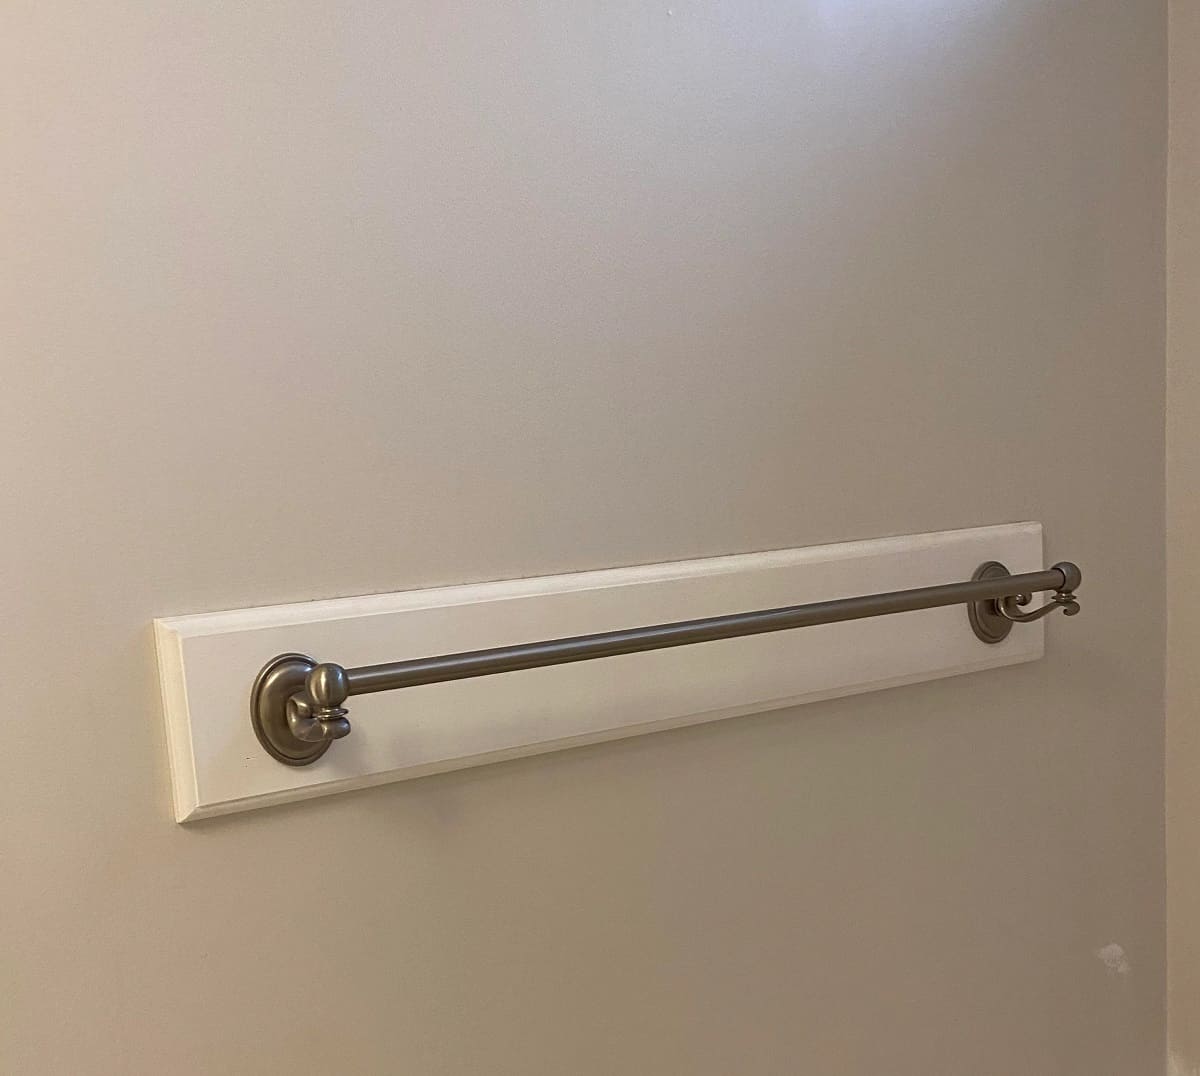 How to Permanently Anchor a Bathroom Towel Bar (DIY)